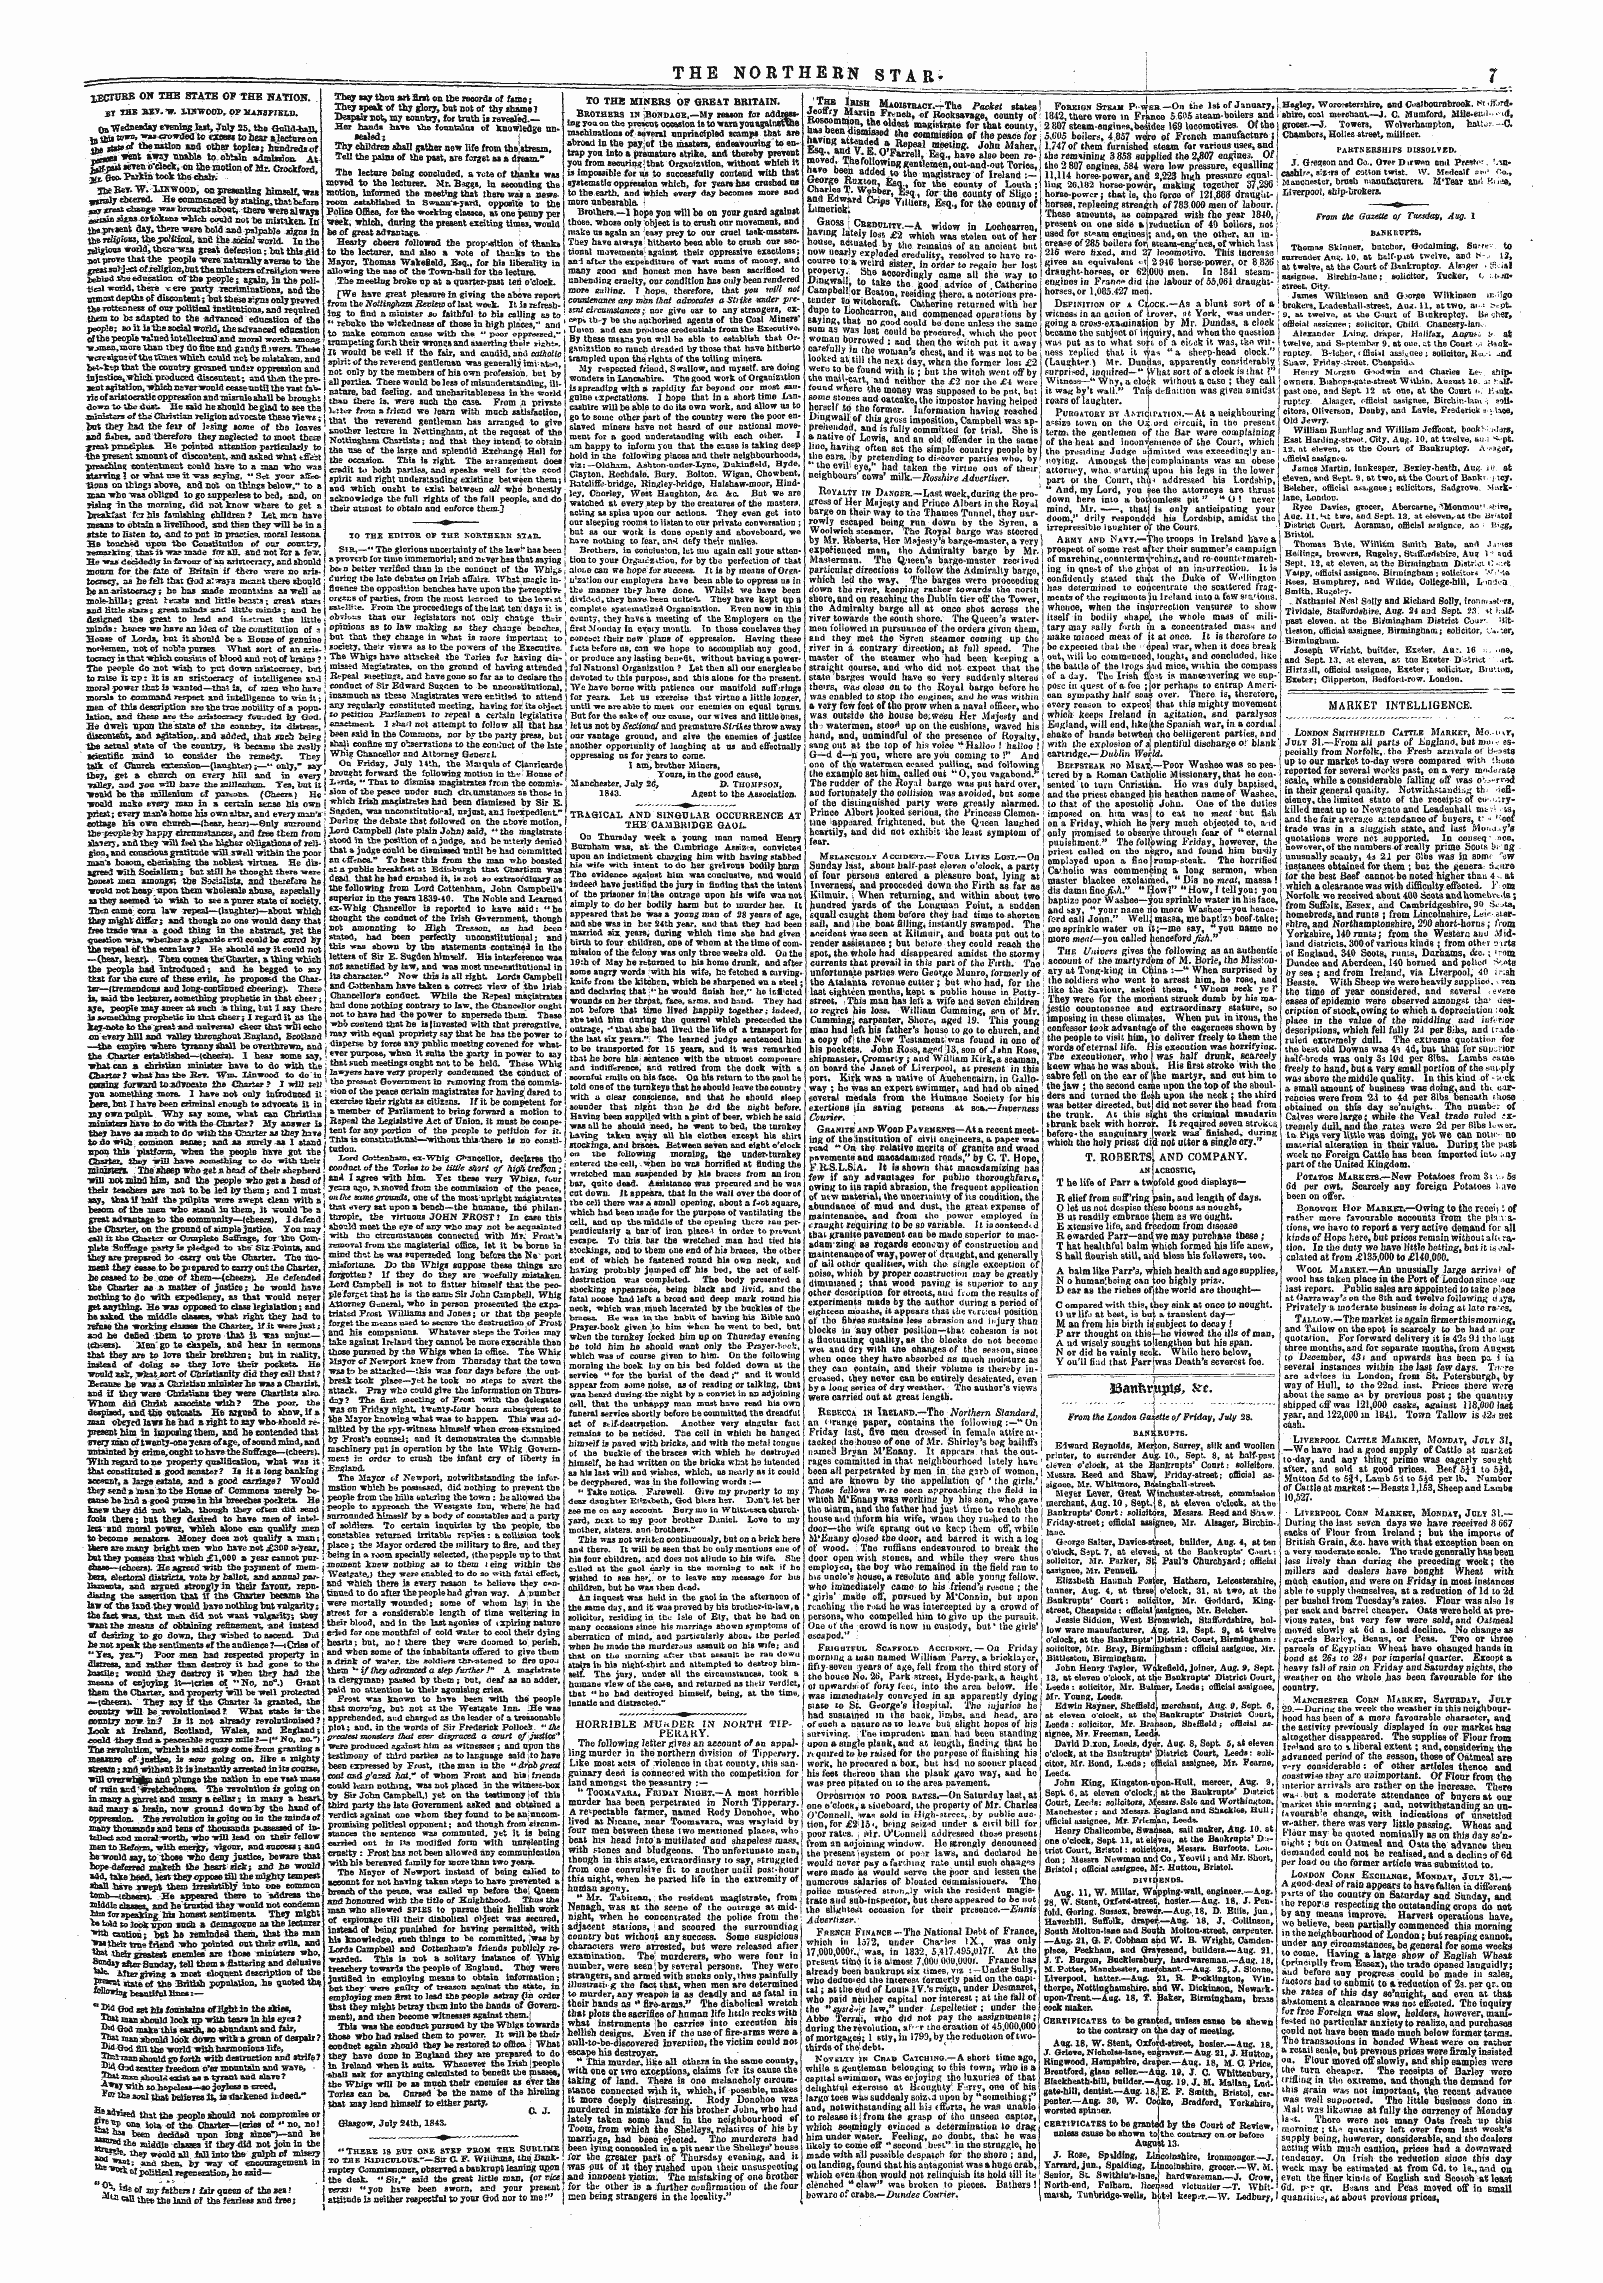 Northern Star (1837-1852): jS F Y, 2nd edition - 23anfcruptg, Srt.